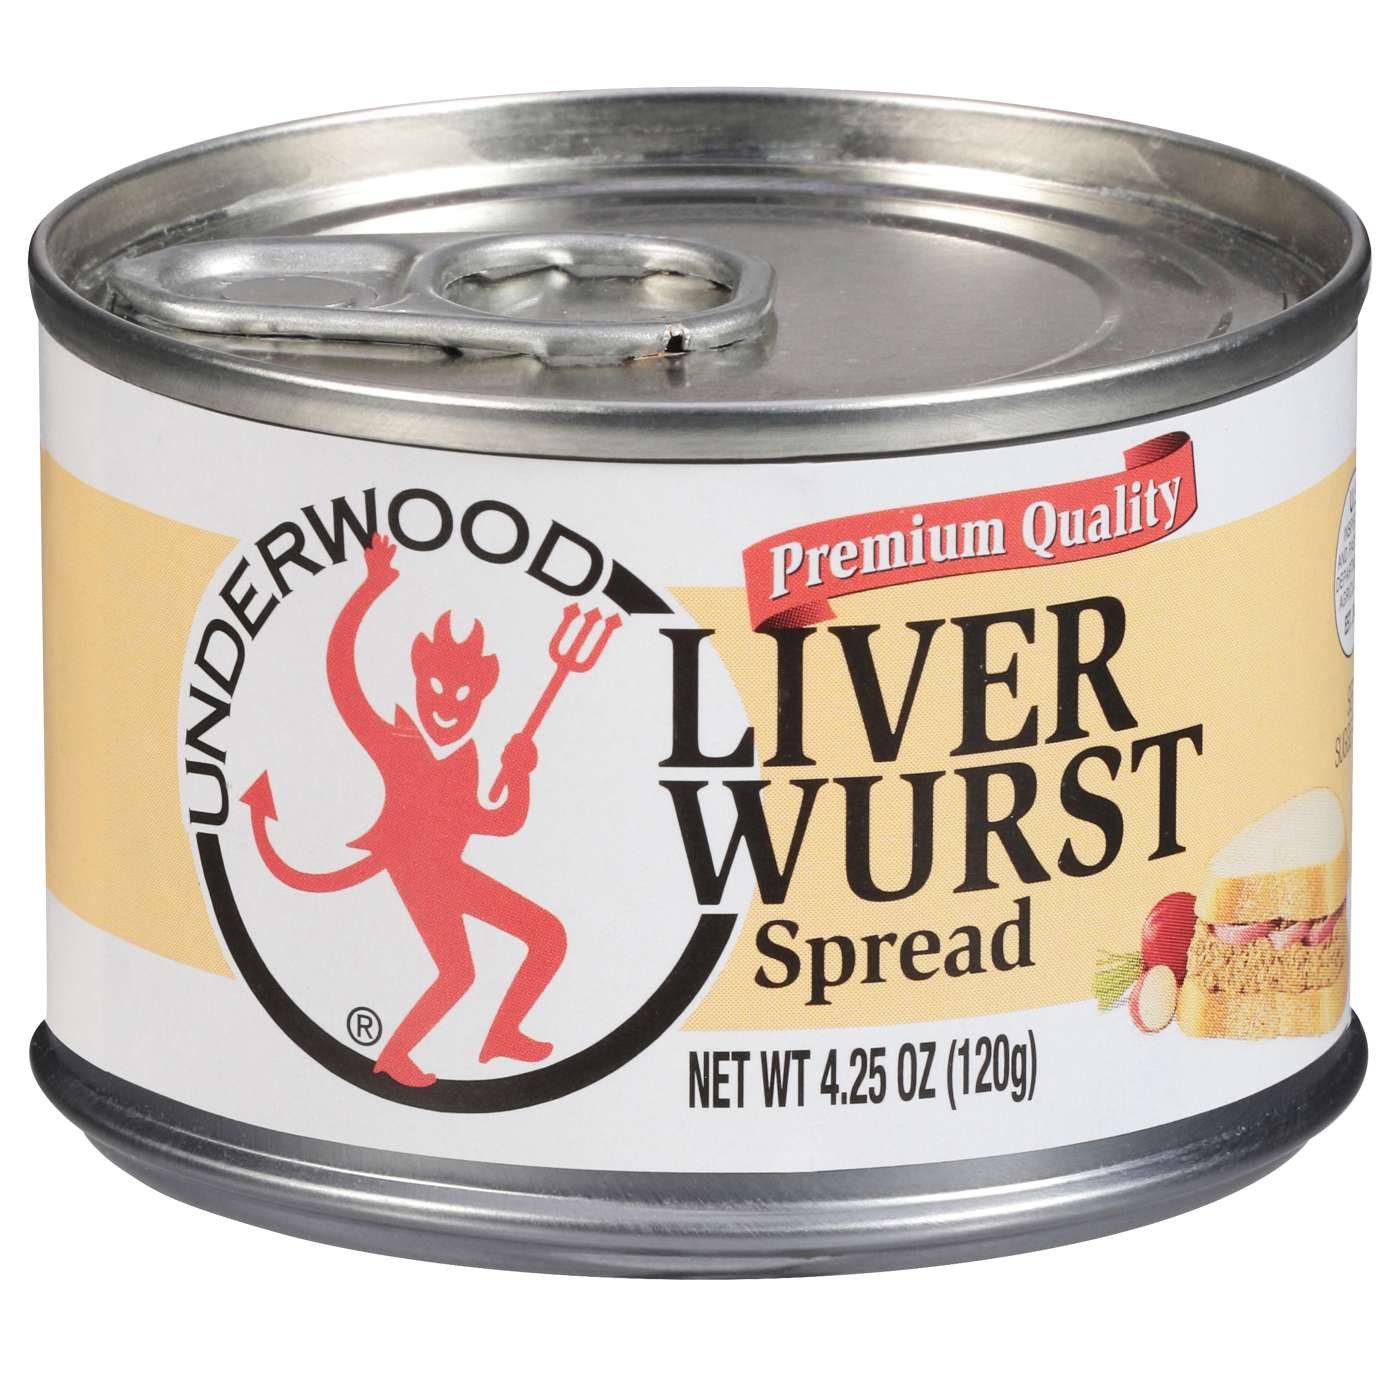 Underwood Liverwurst Spread; image 1 of 3